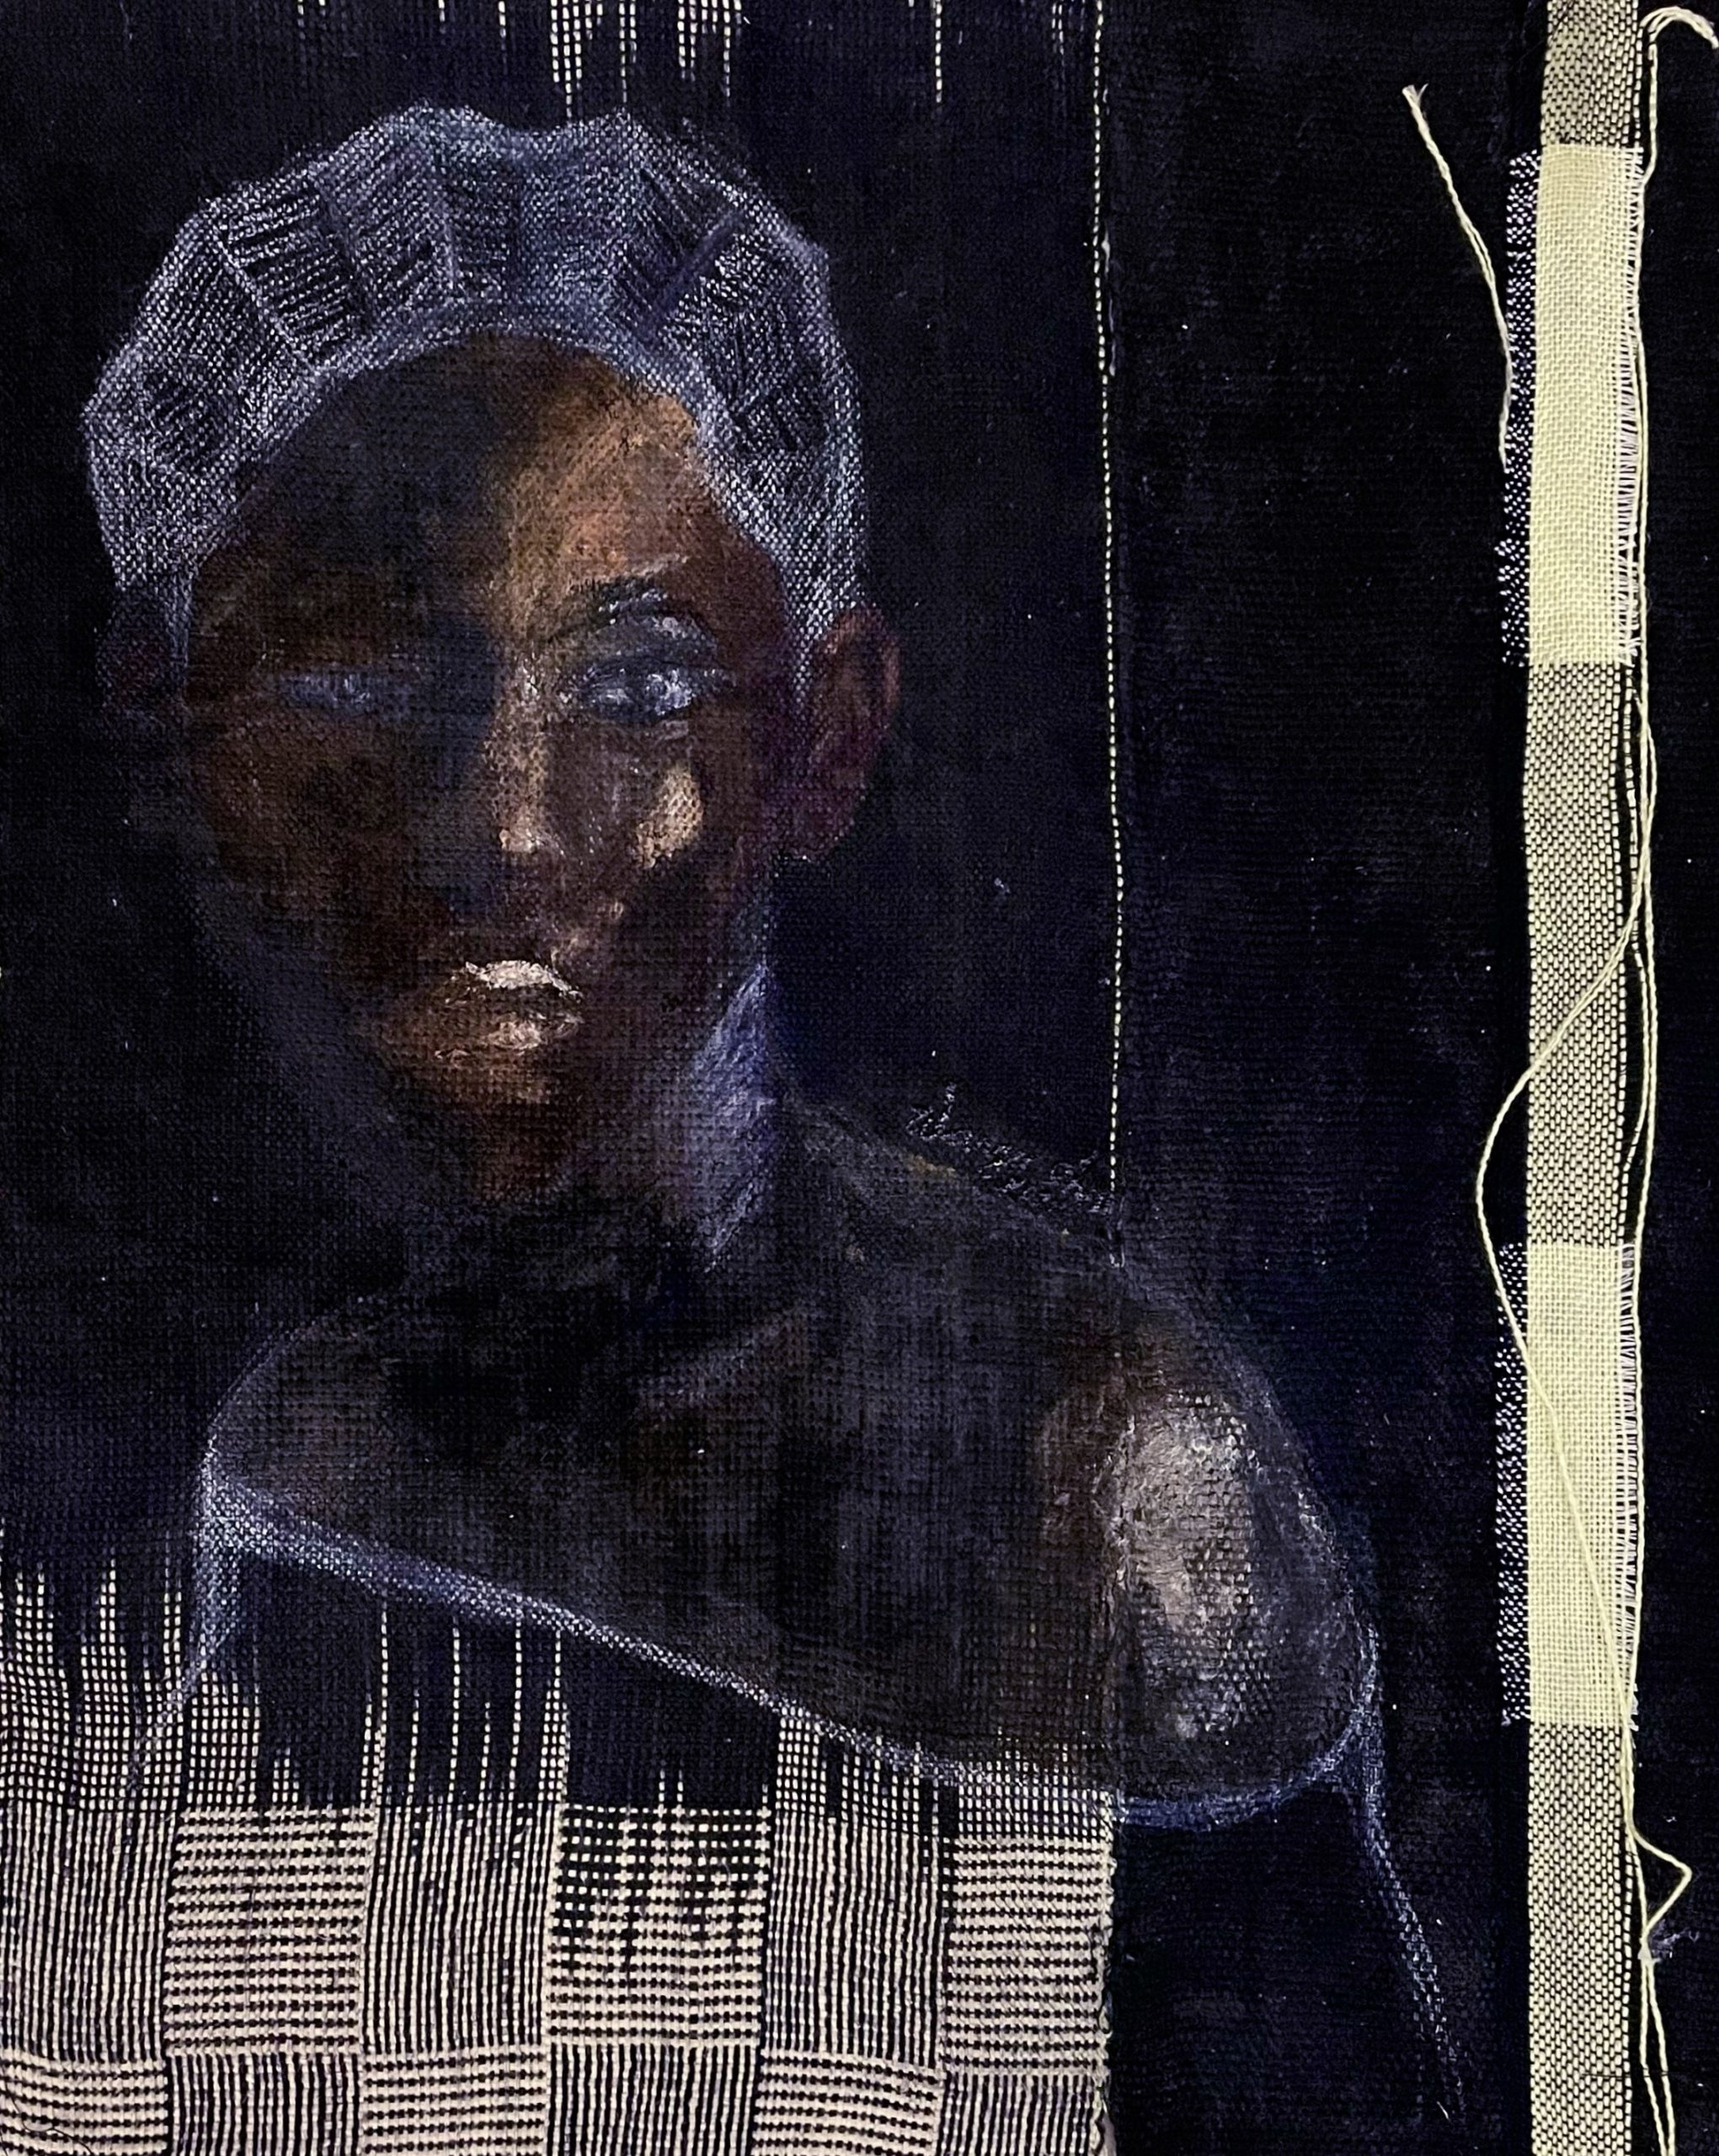 Wan Ipav (Daughter of Ipav), 2021 21 x 18.5” Charcoal, oil, acrylic, A’nger cloth on canvas